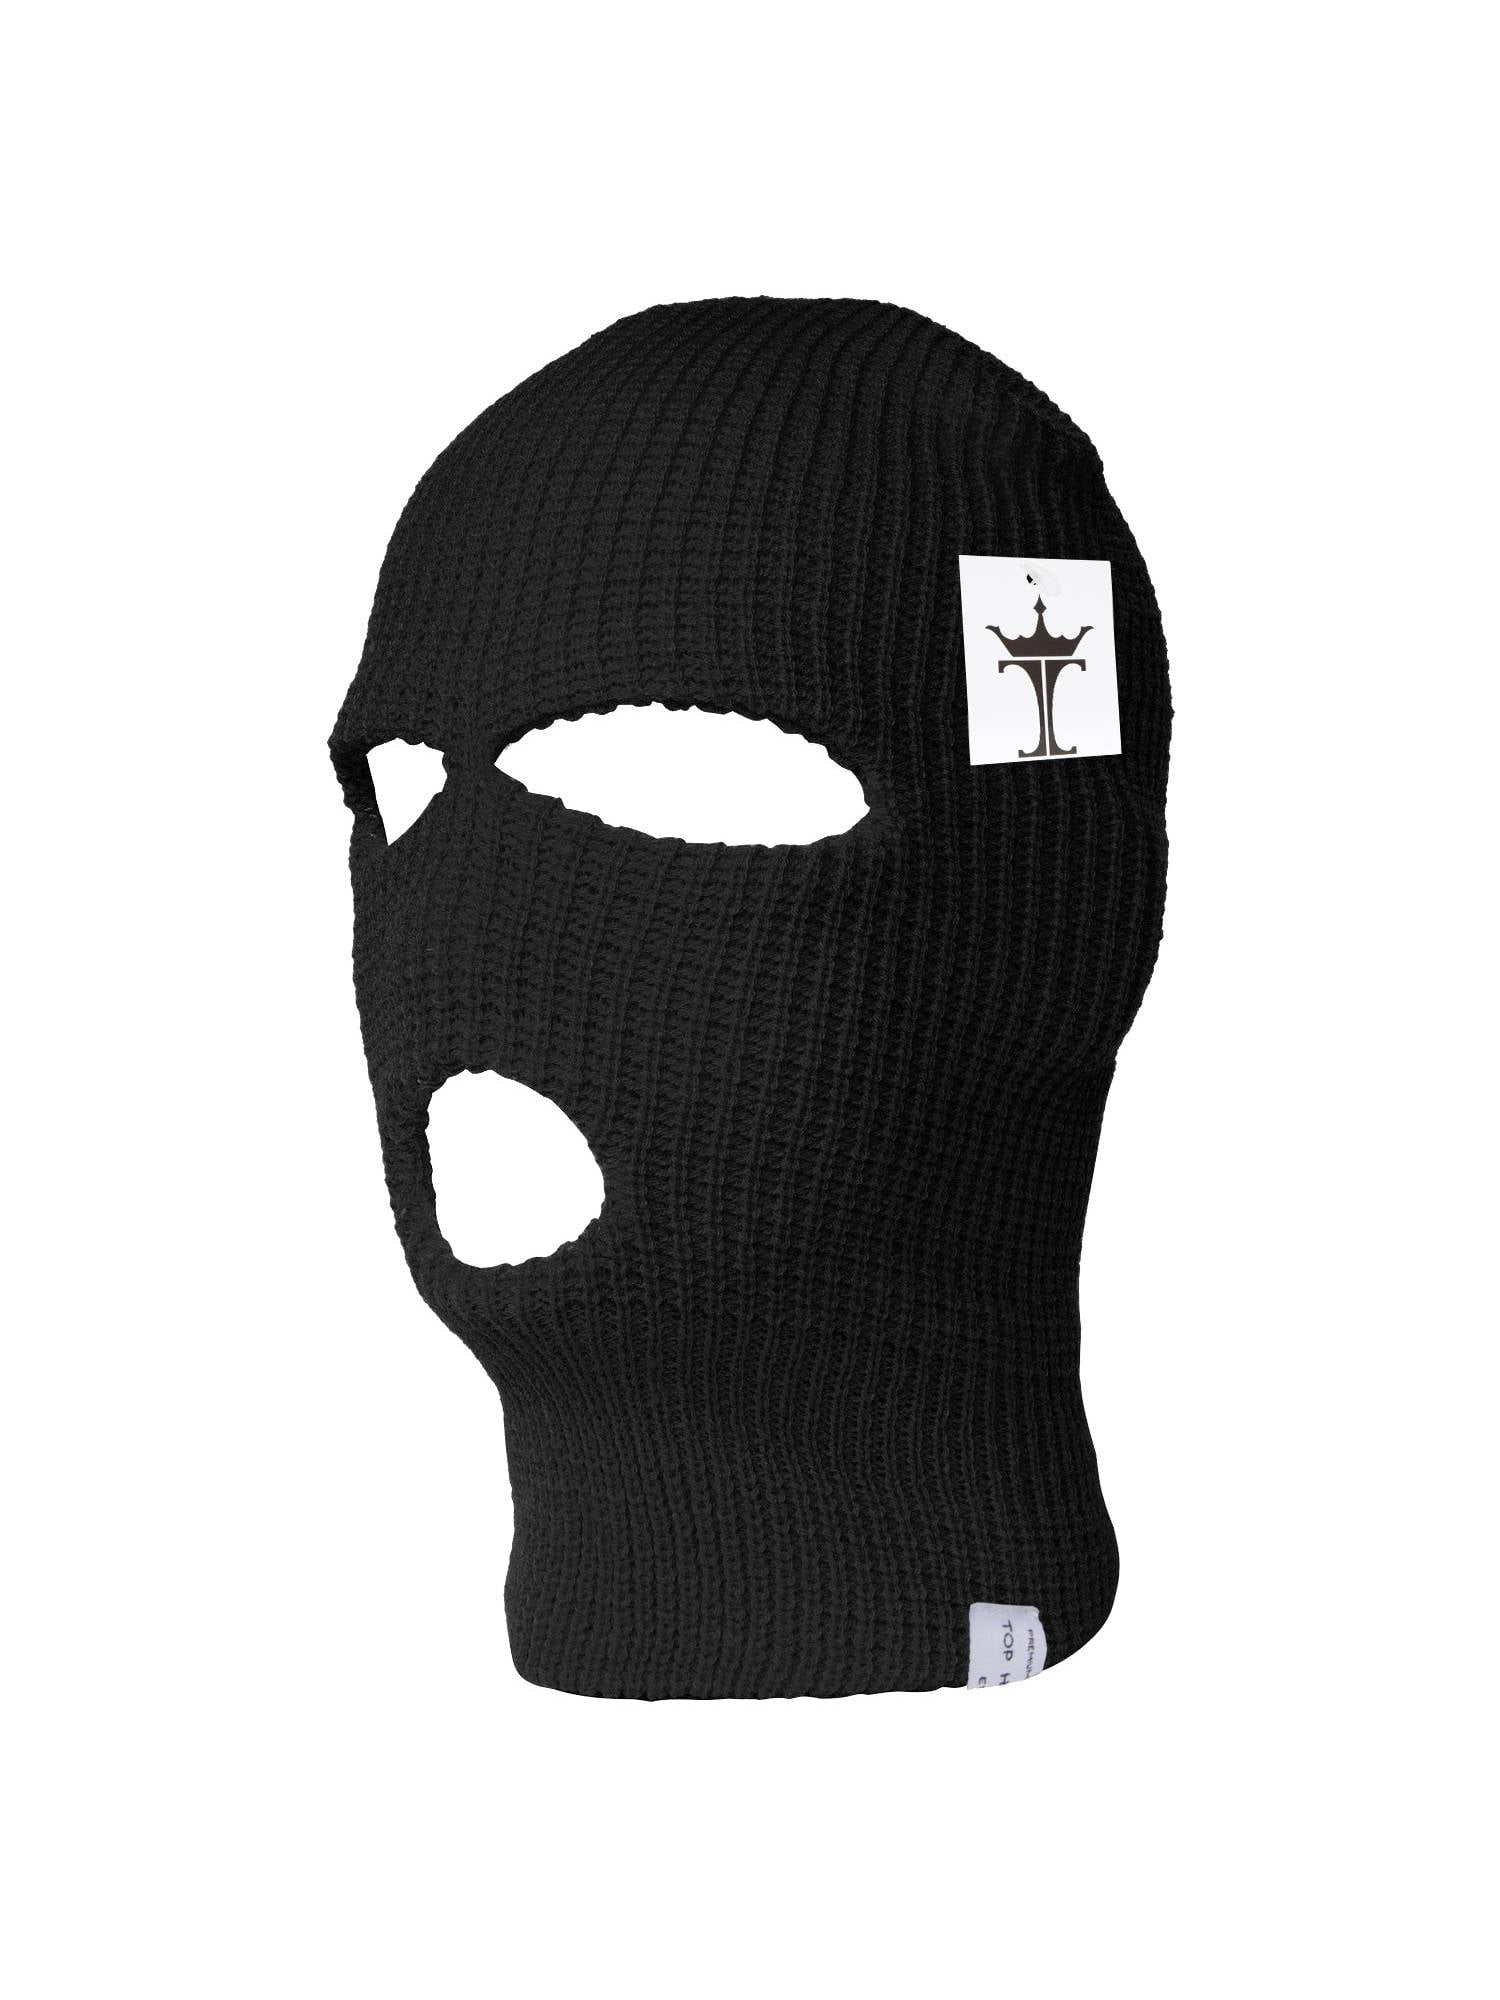 Download TopHeadwear 3-Hole Ski Face Mask Balaclava, Black ...